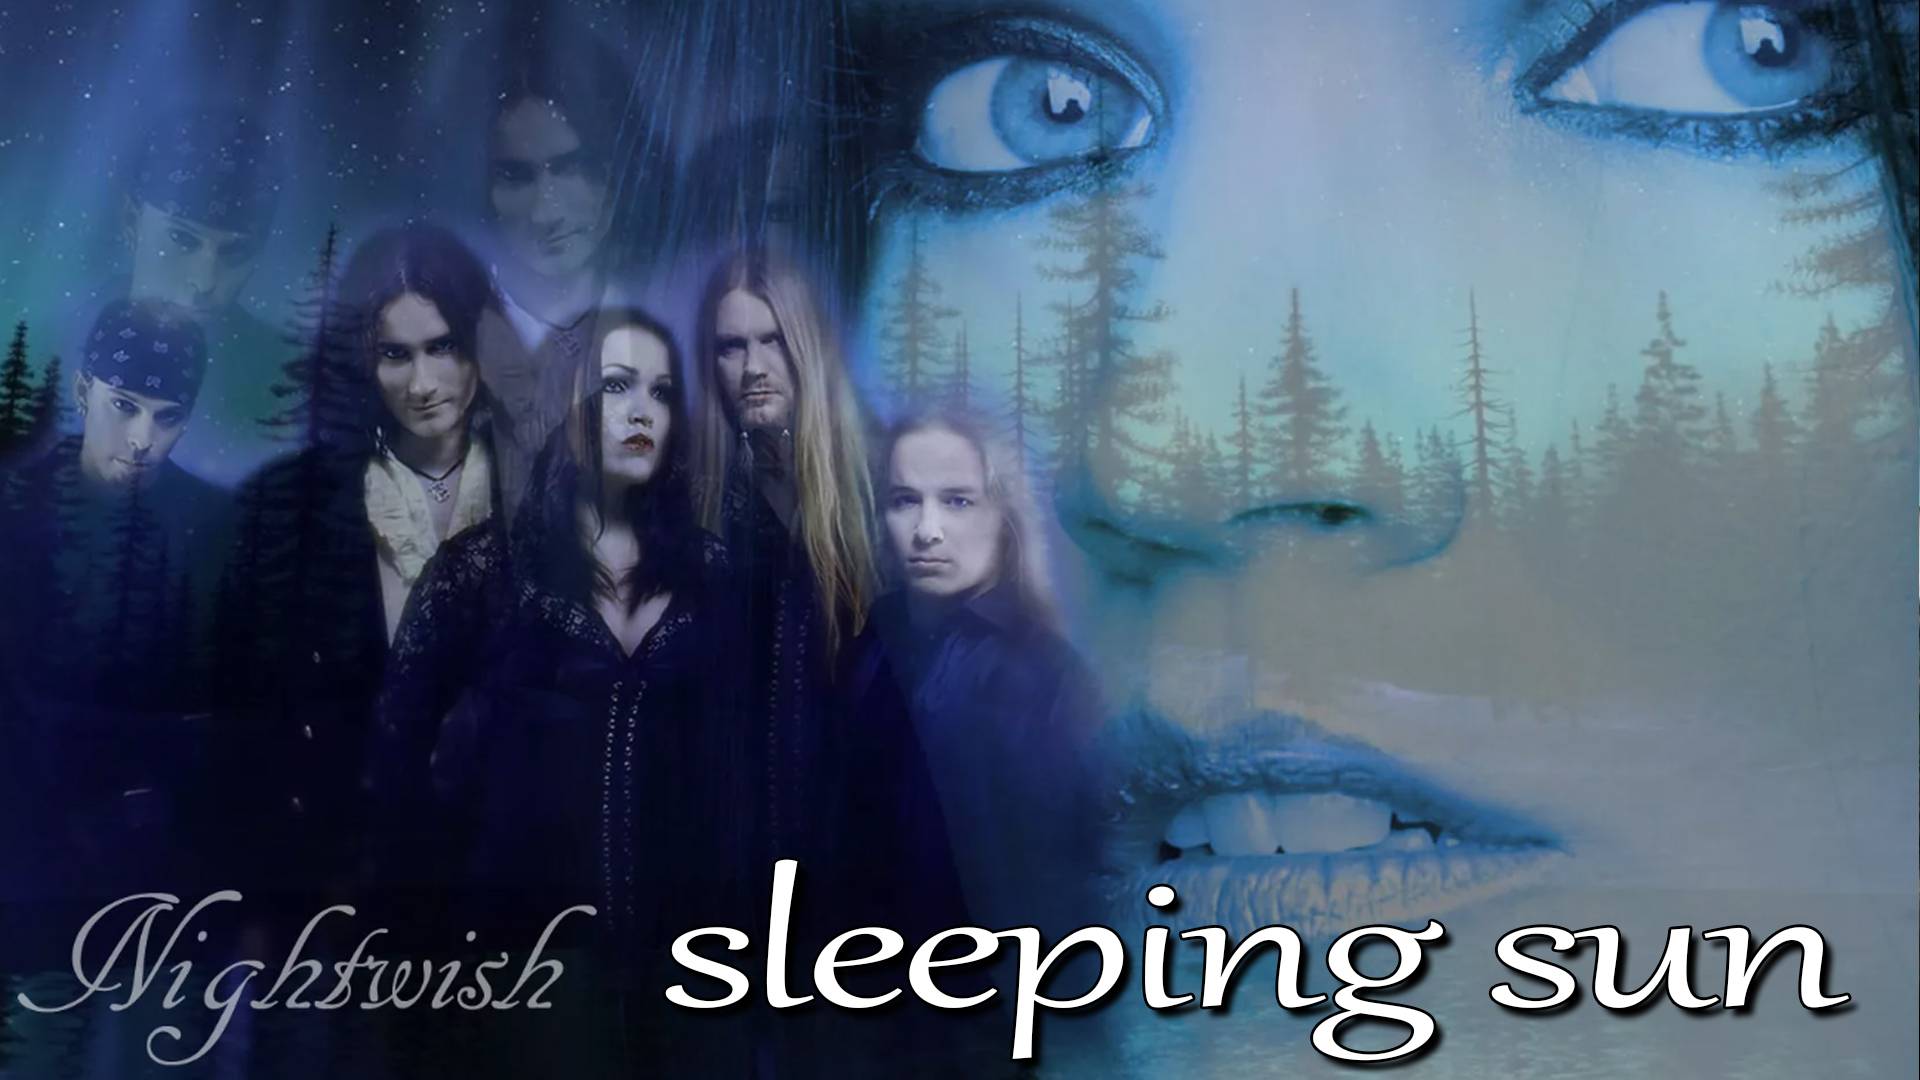 Nightwish - Sleeping sun. Cover